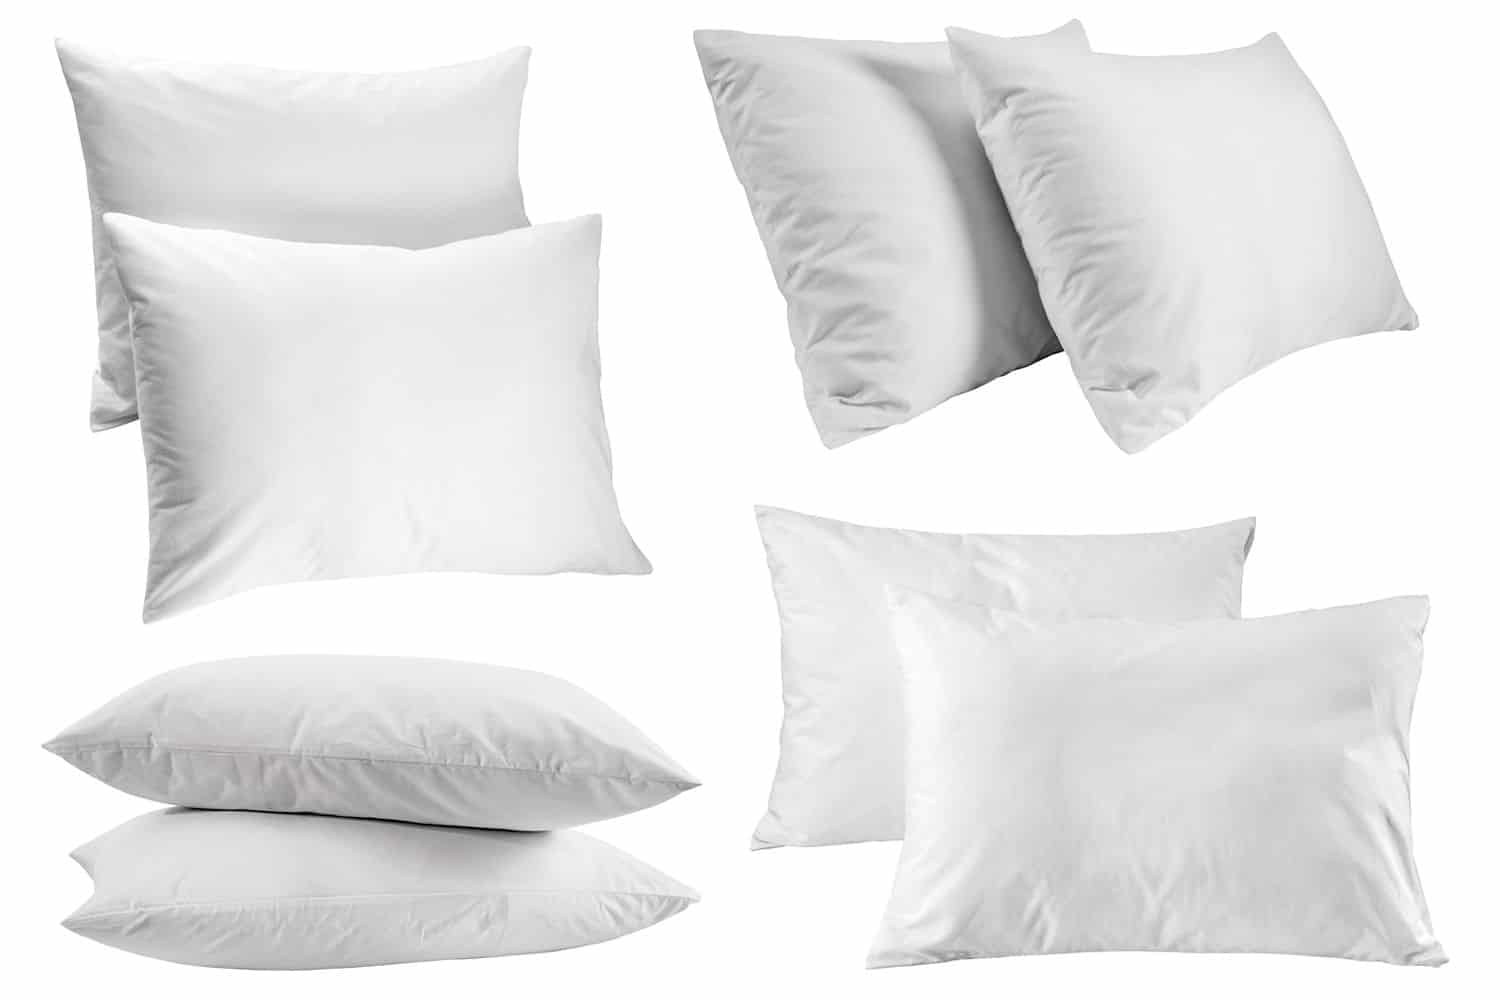 https://www.foamorder.com/img/products/custom-down-pillows/custom-down-pillows.jpg